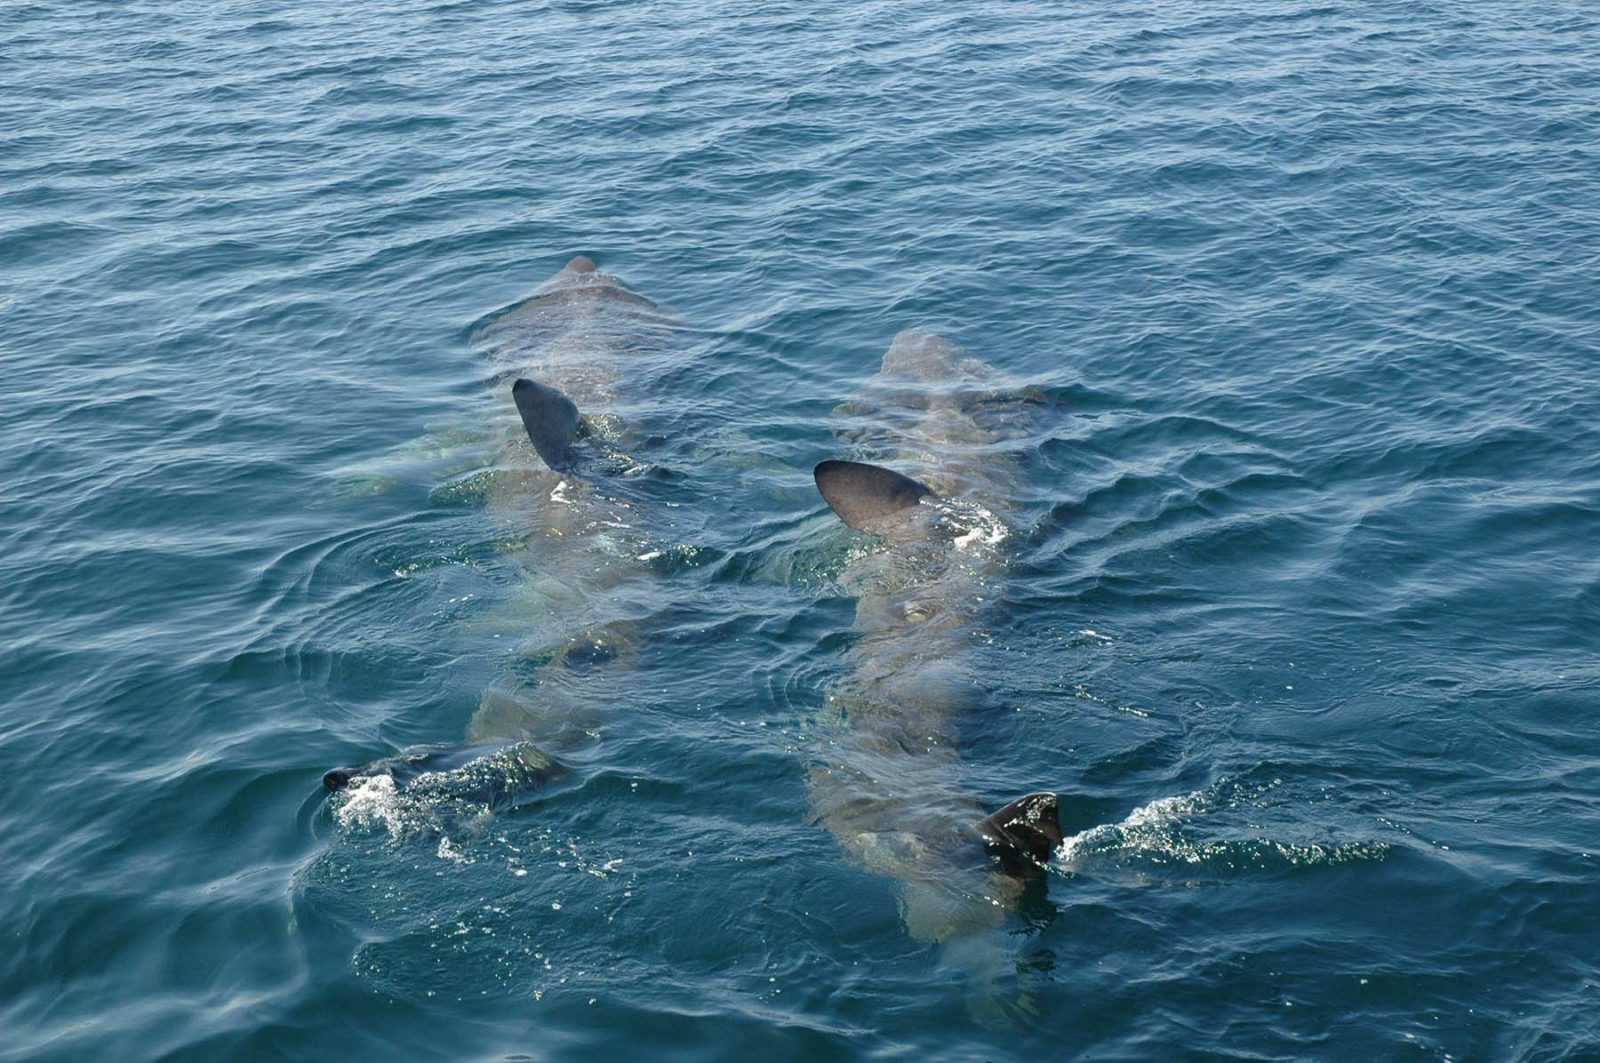 doi rechini basking